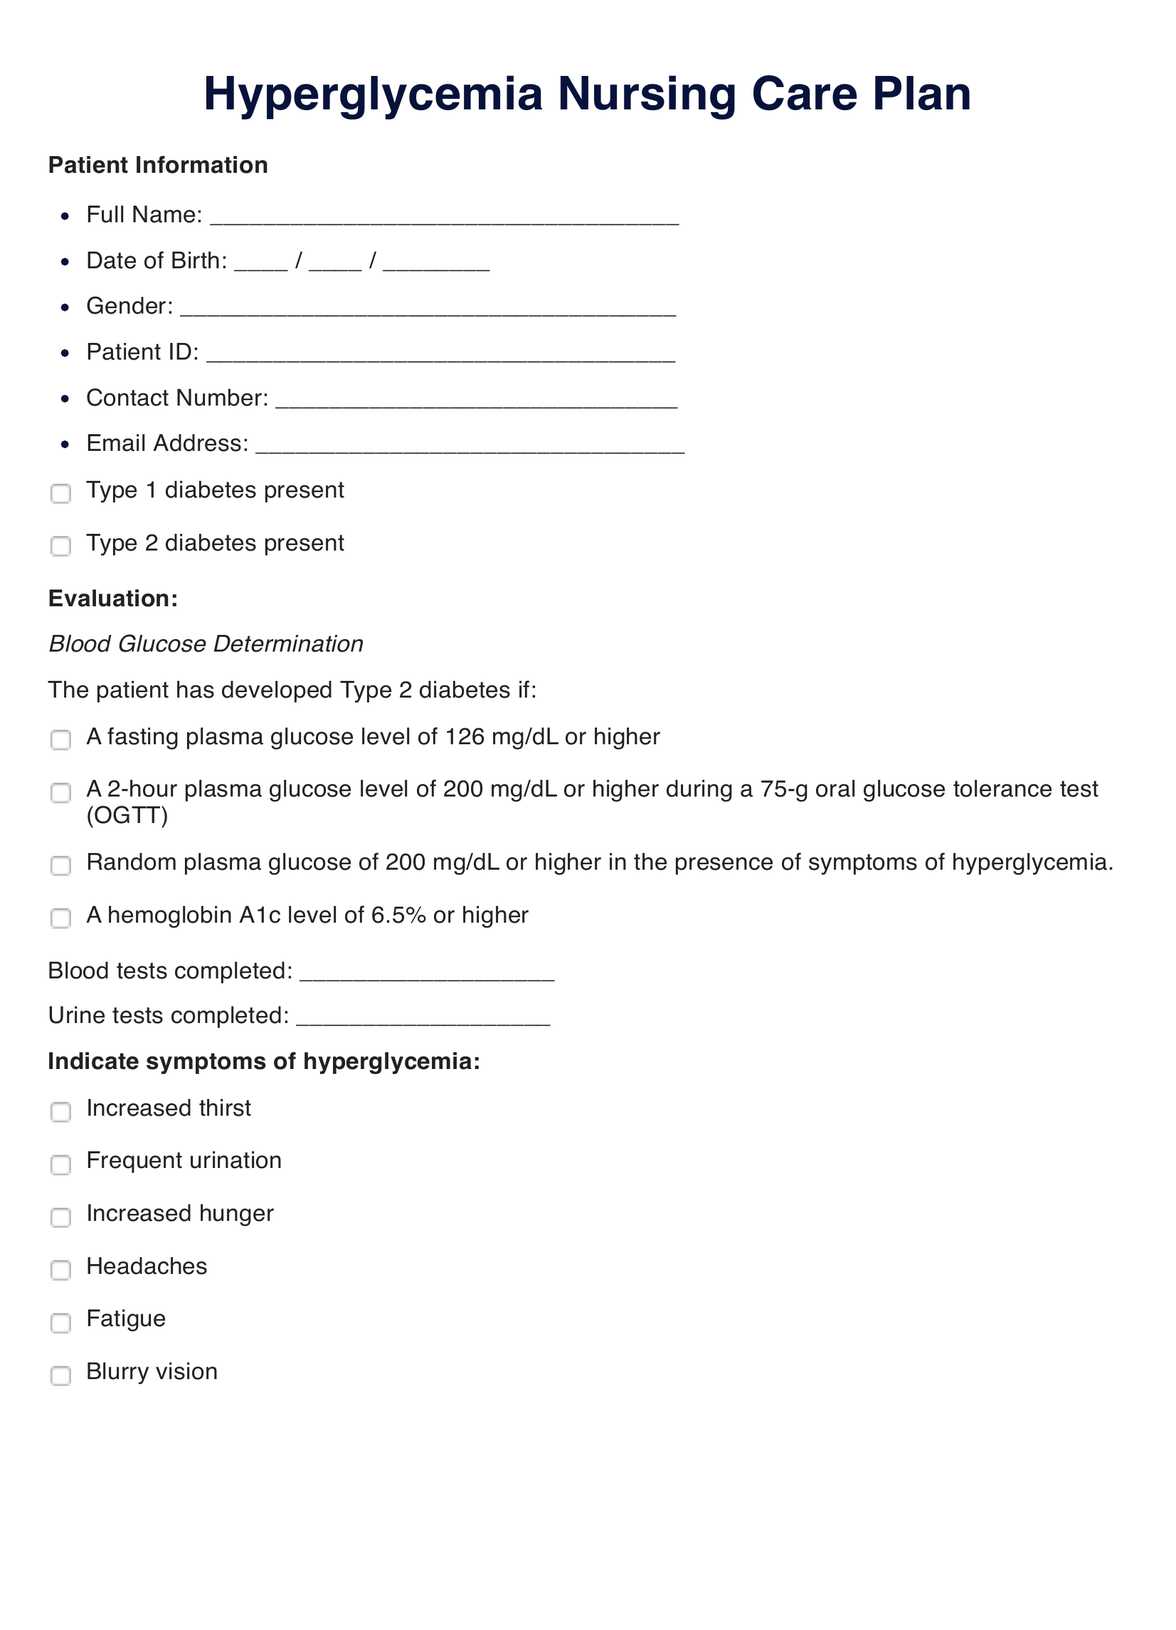 Hyperglycemia Nursing Care Plan PDF Example